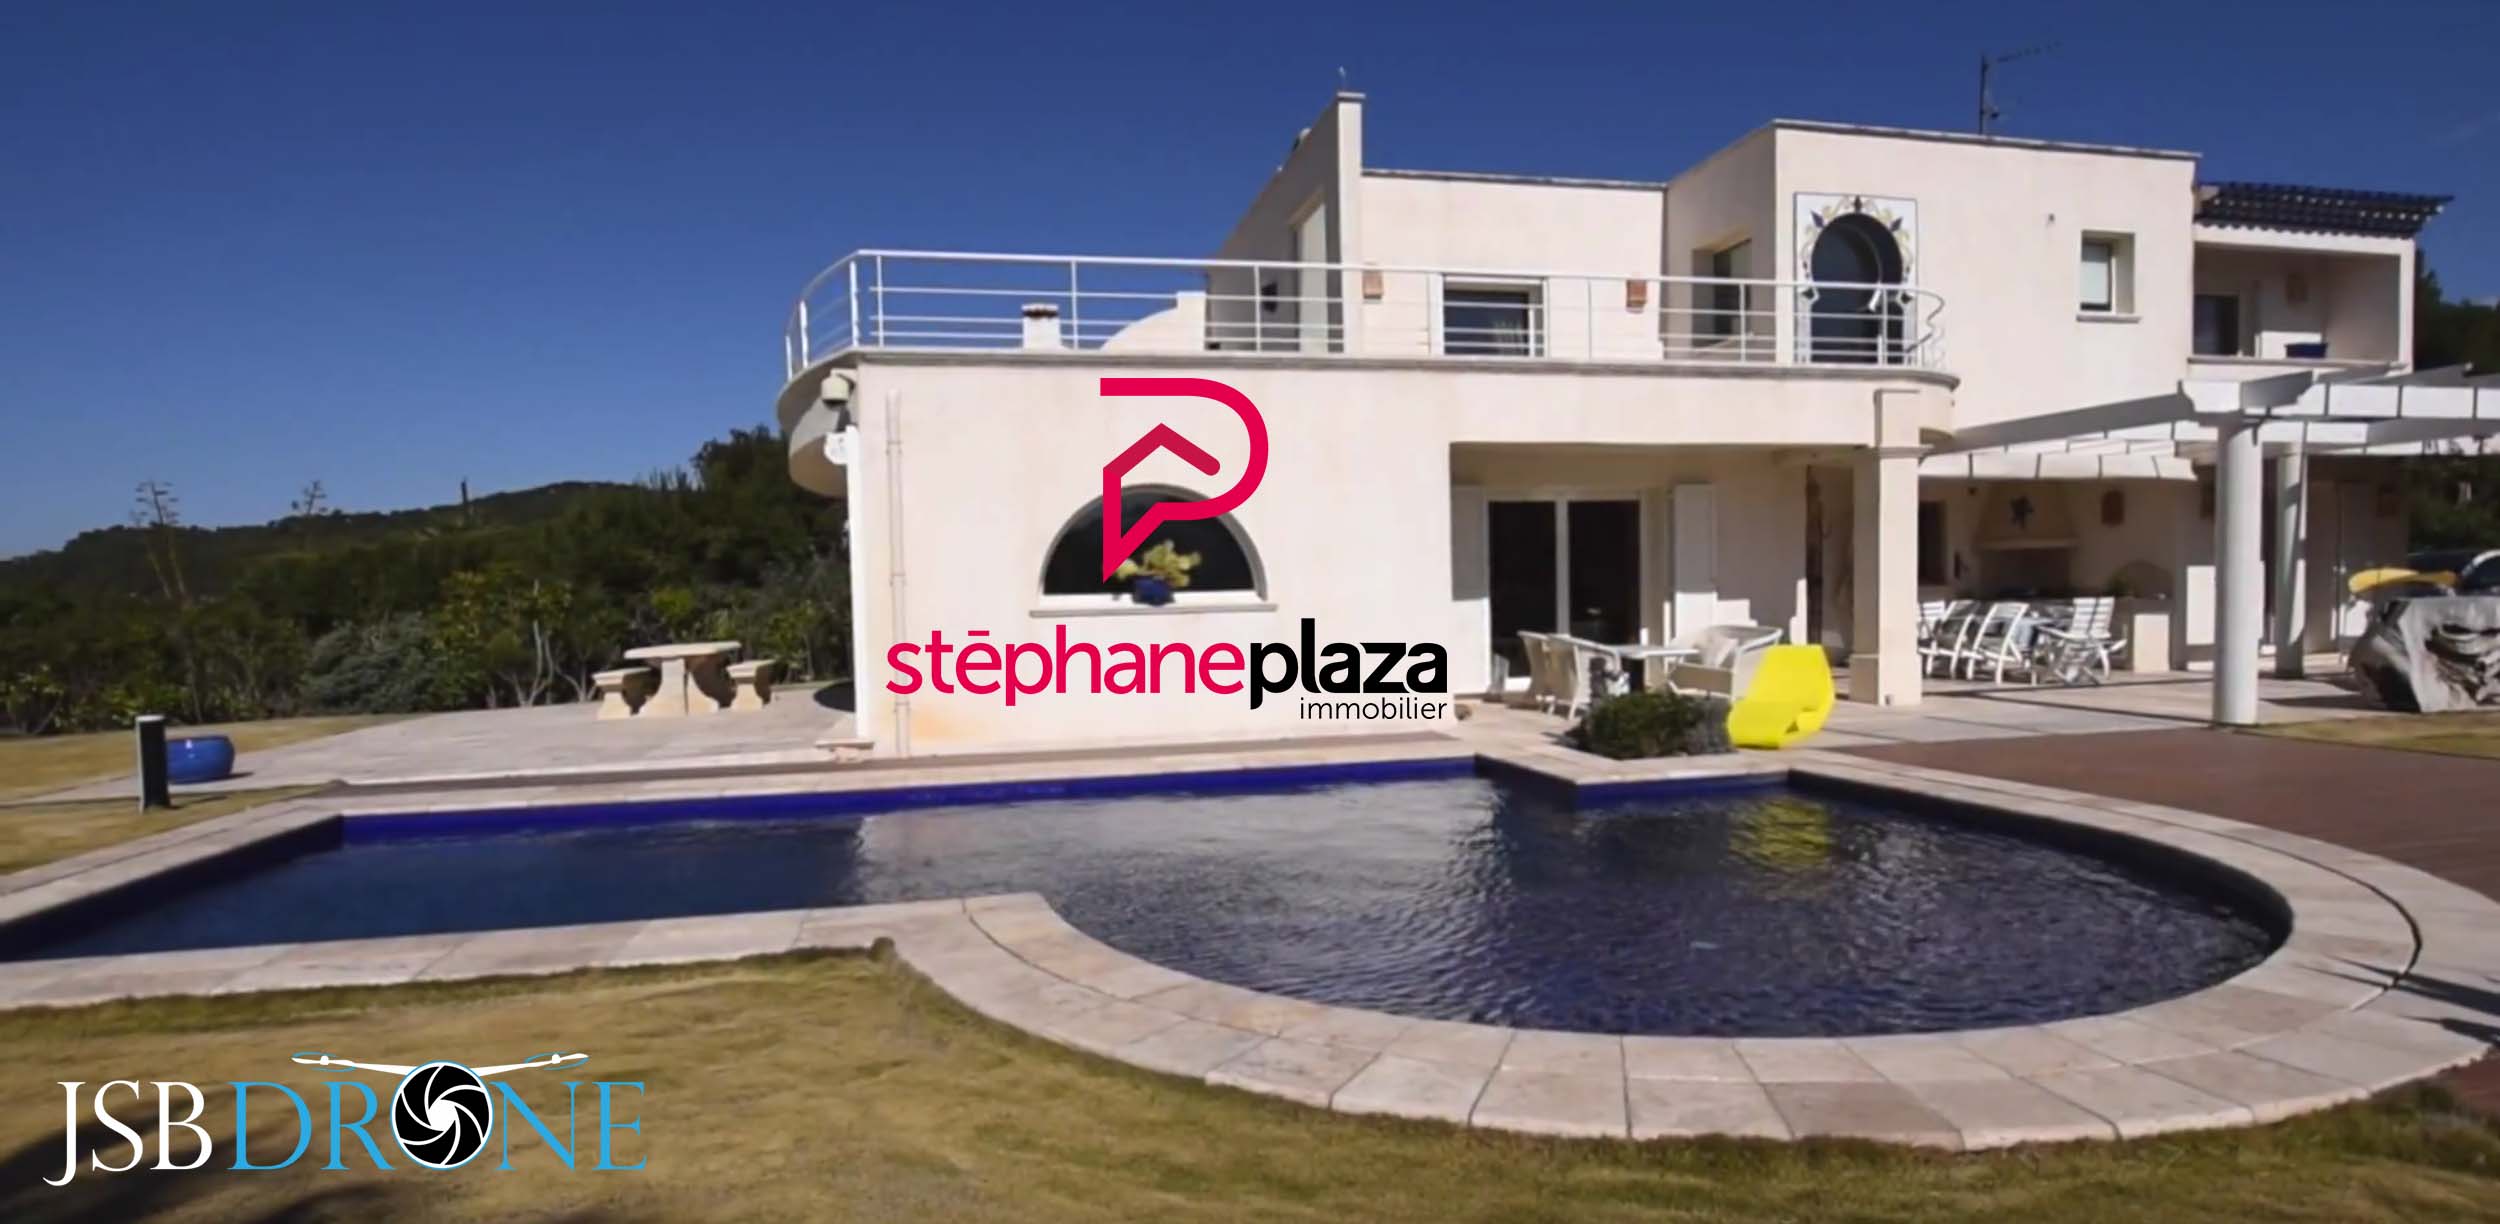 Stephane plaza immobilier maison vue drone